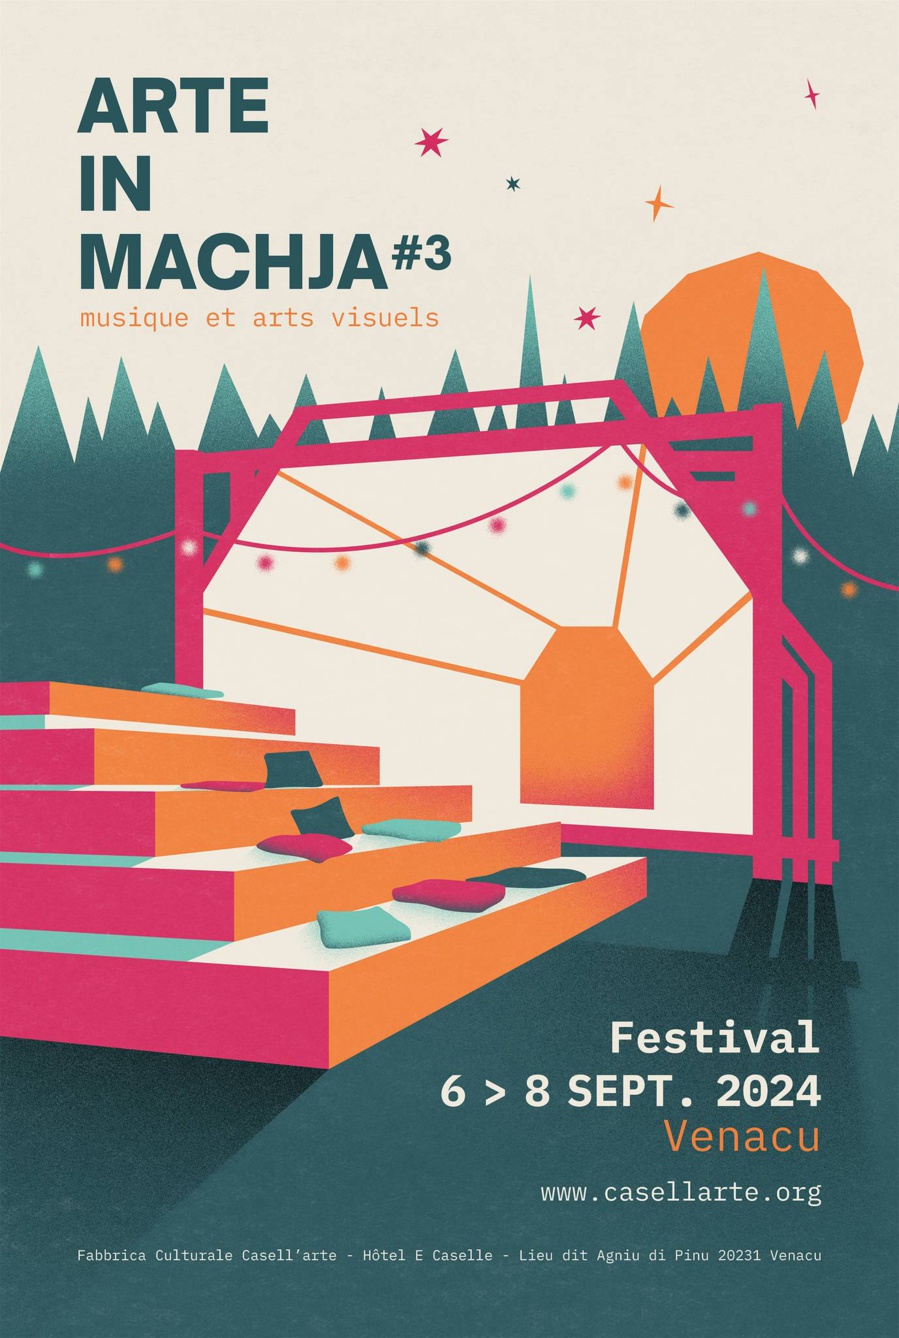 Résidence et festival / musique & arts visuels / Arte In Machja #3 - Casell'arte - Venacu 